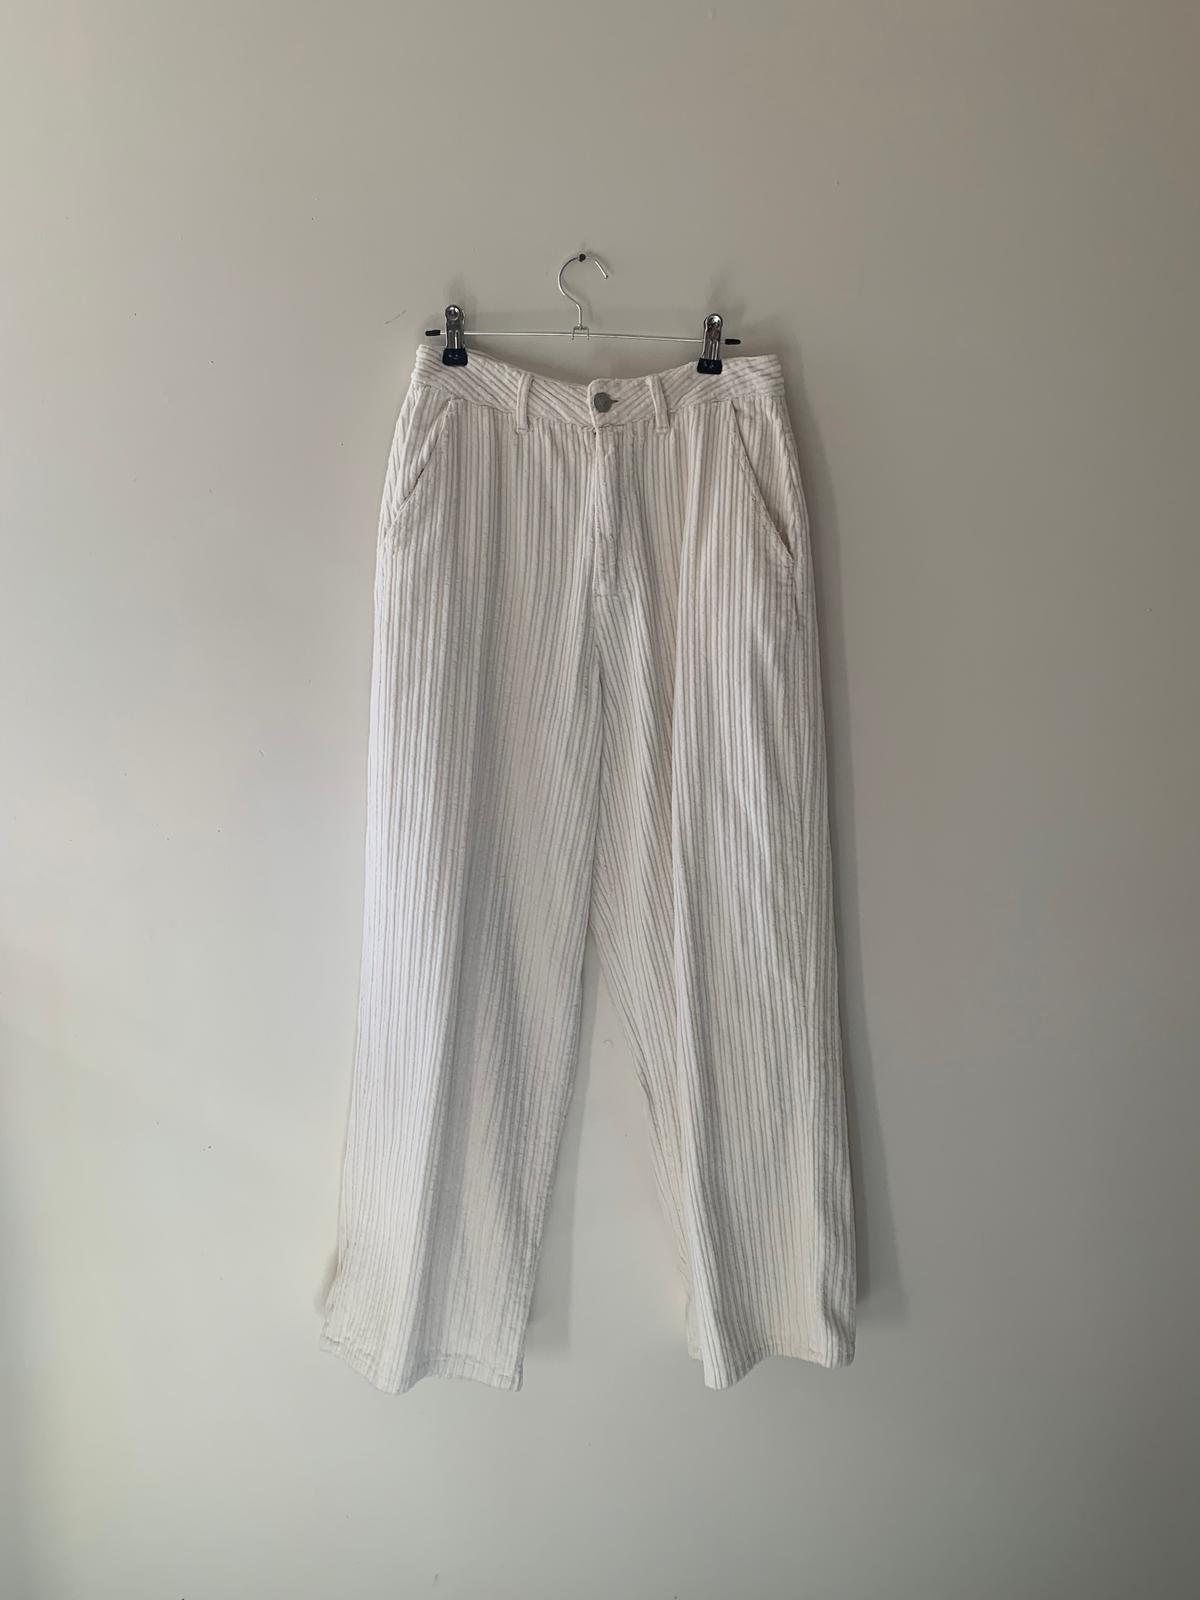 Photo of Pantalon taille haute Zara grandeur 6 / 28